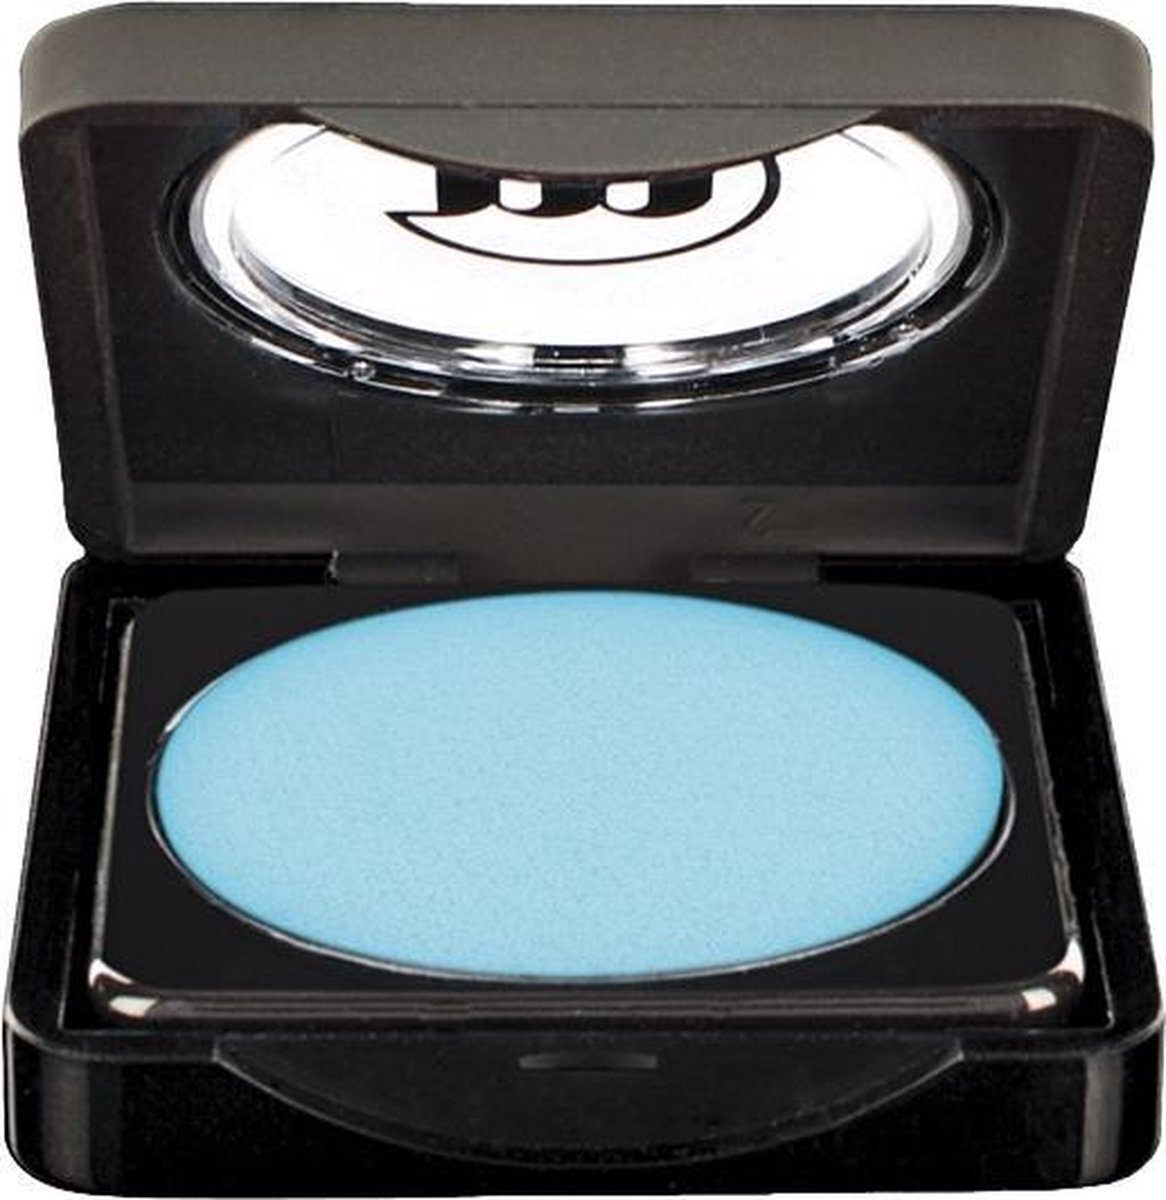 Make-up Studio Eyeshadow in Box Type B Oogschaduw - 307